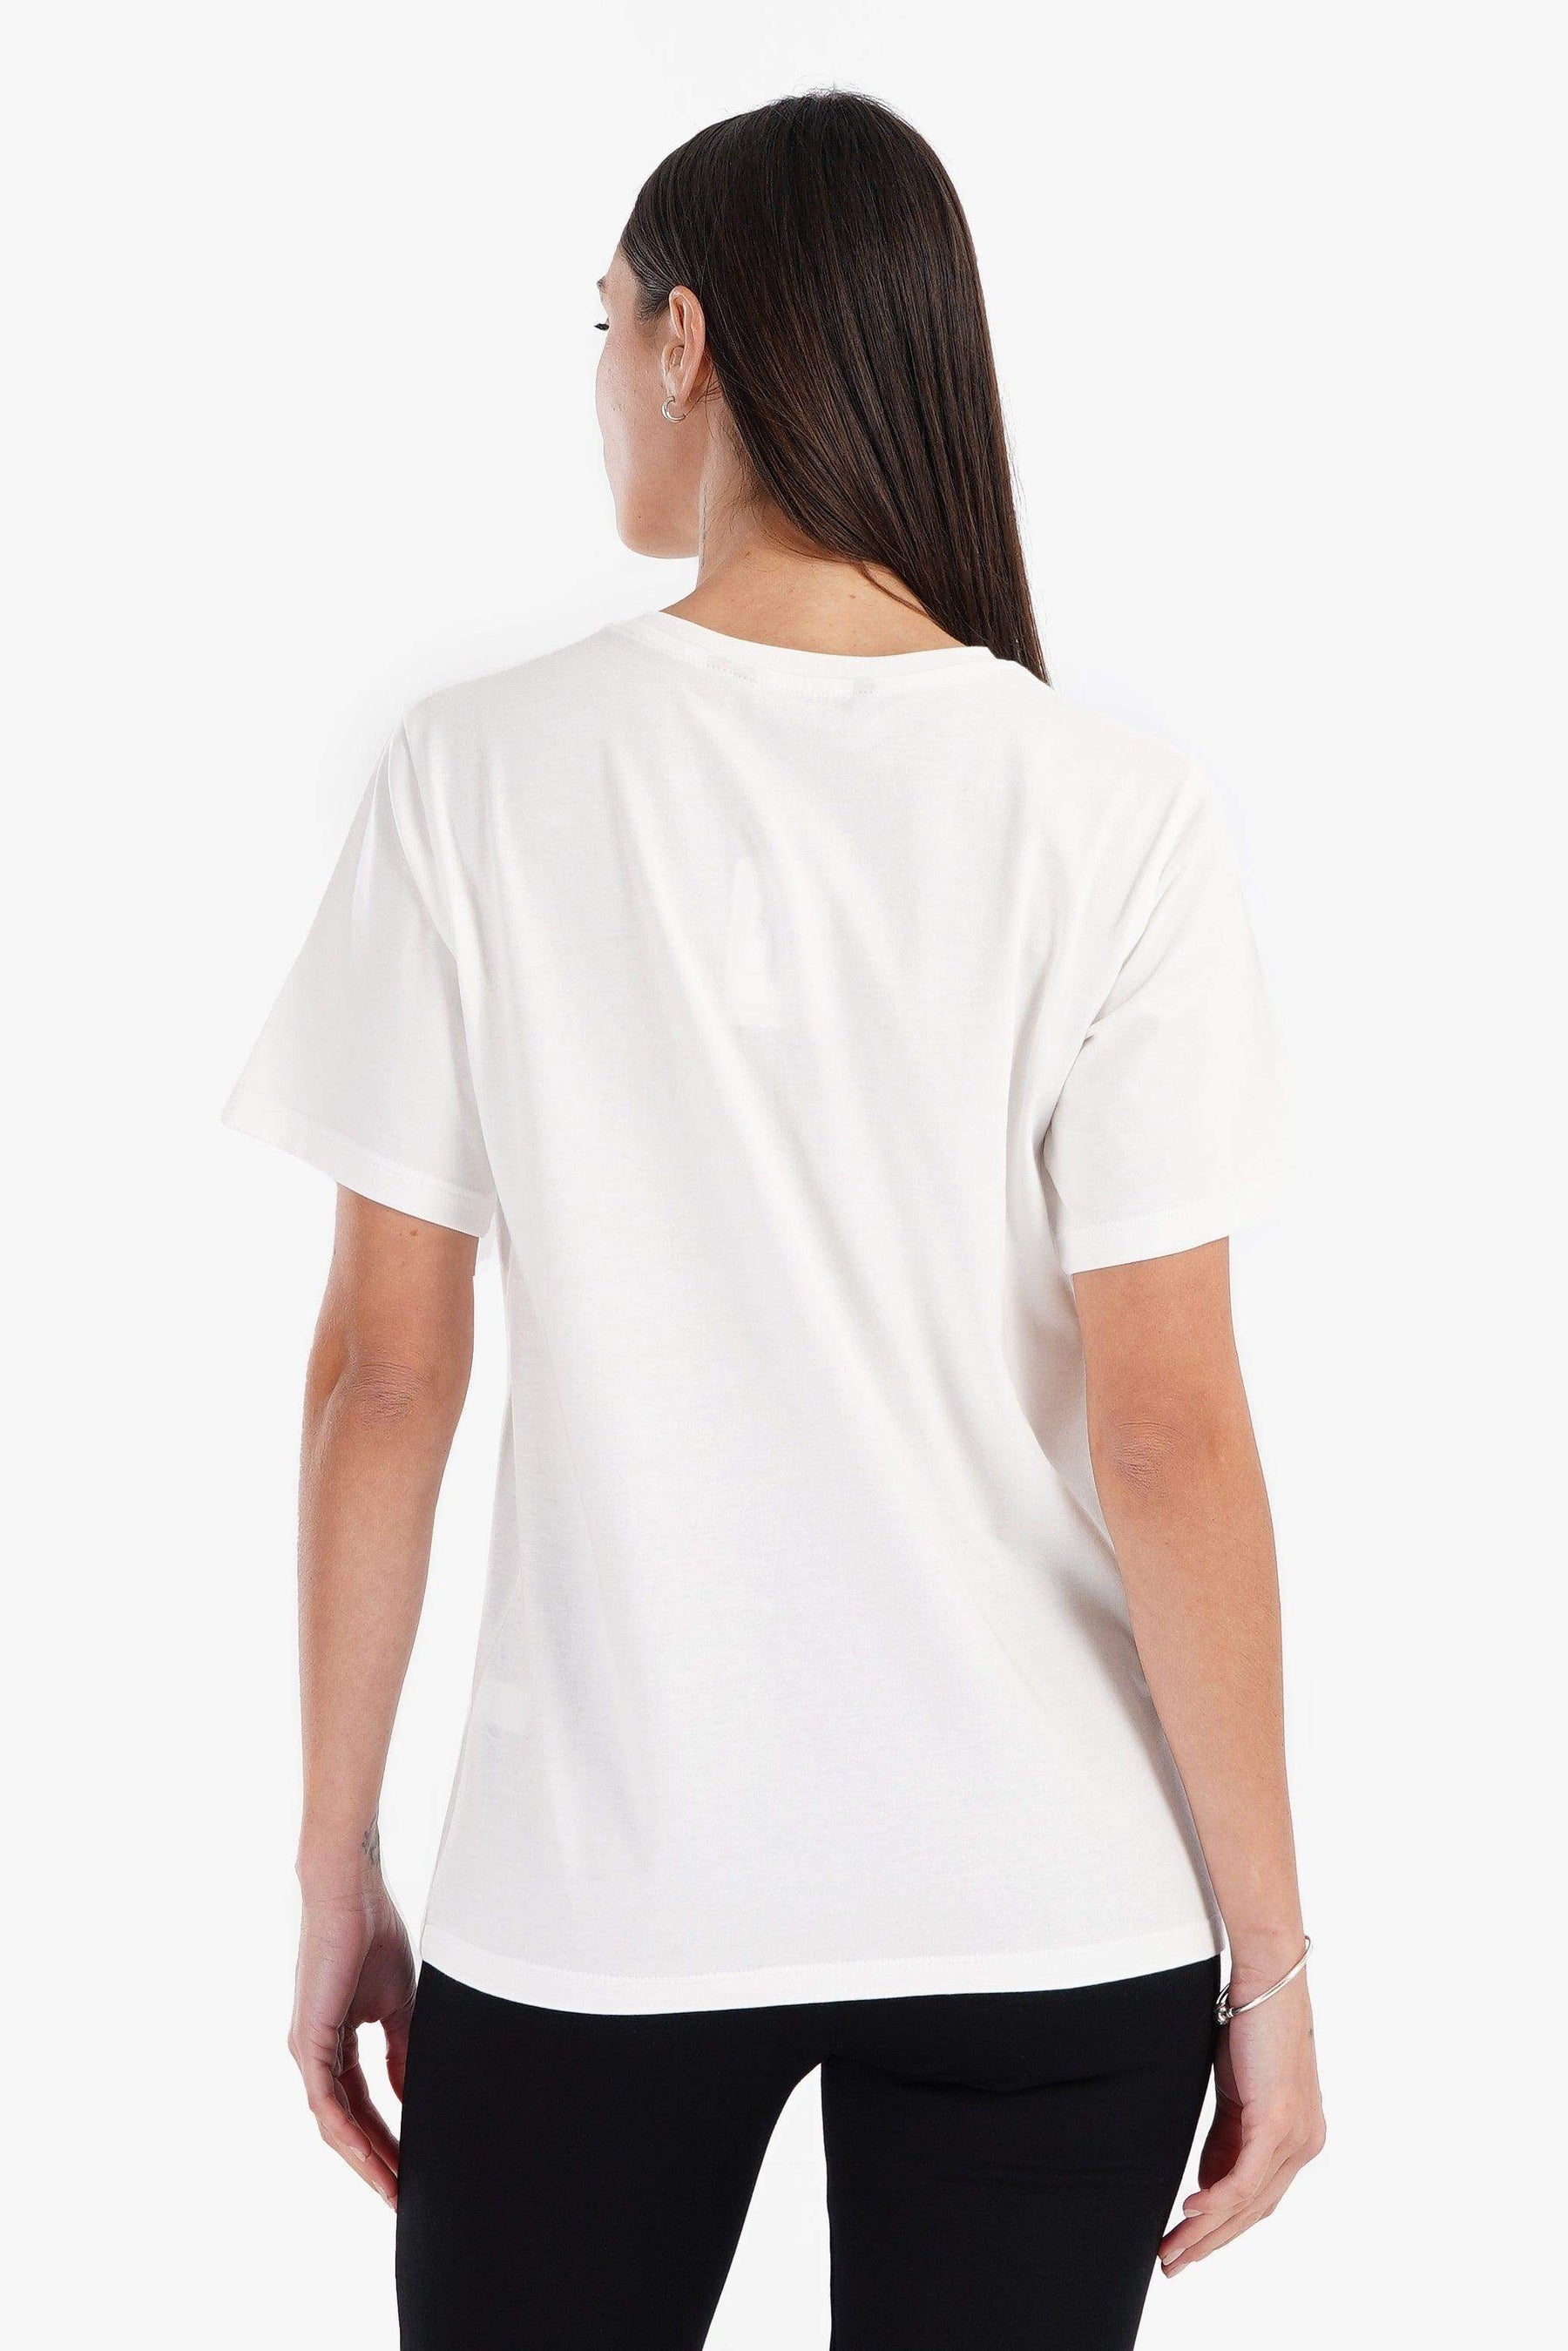 Off White Lounge T-Shirt - Carina - كارينا